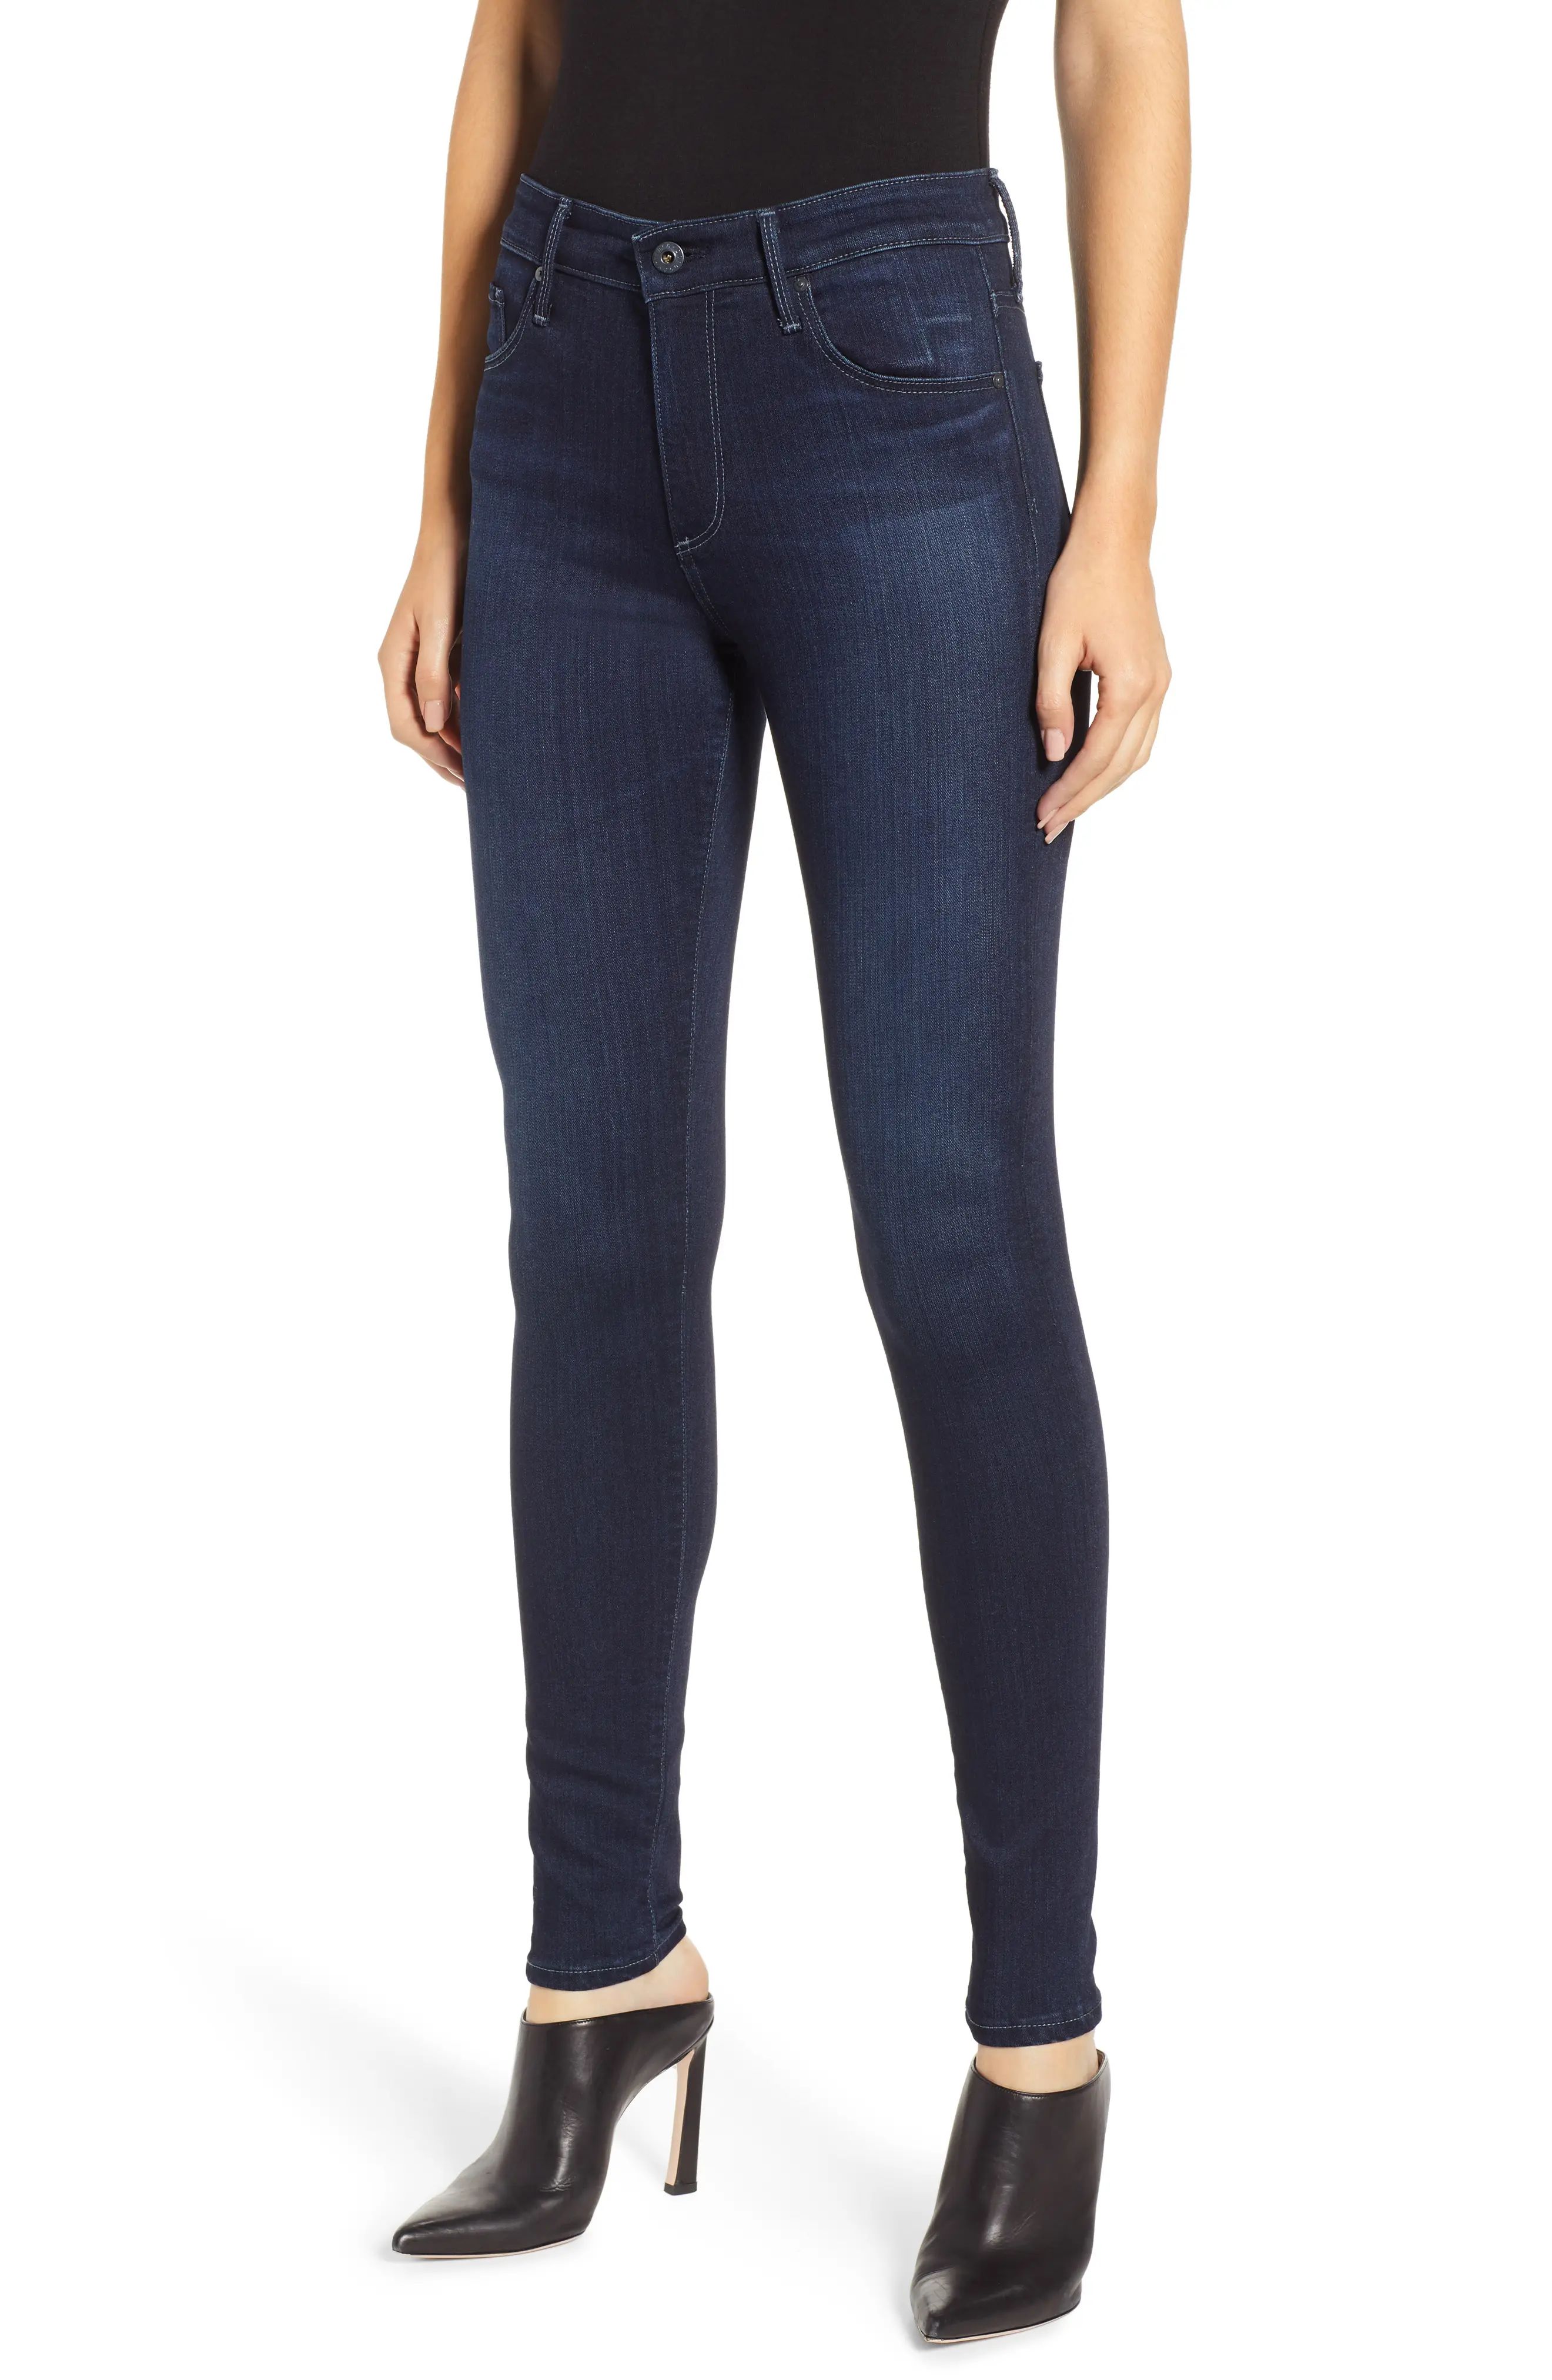 AG Farrah High Waist Skinny Jeans, Size 26 in Blue Basin at Nordstrom | Nordstrom